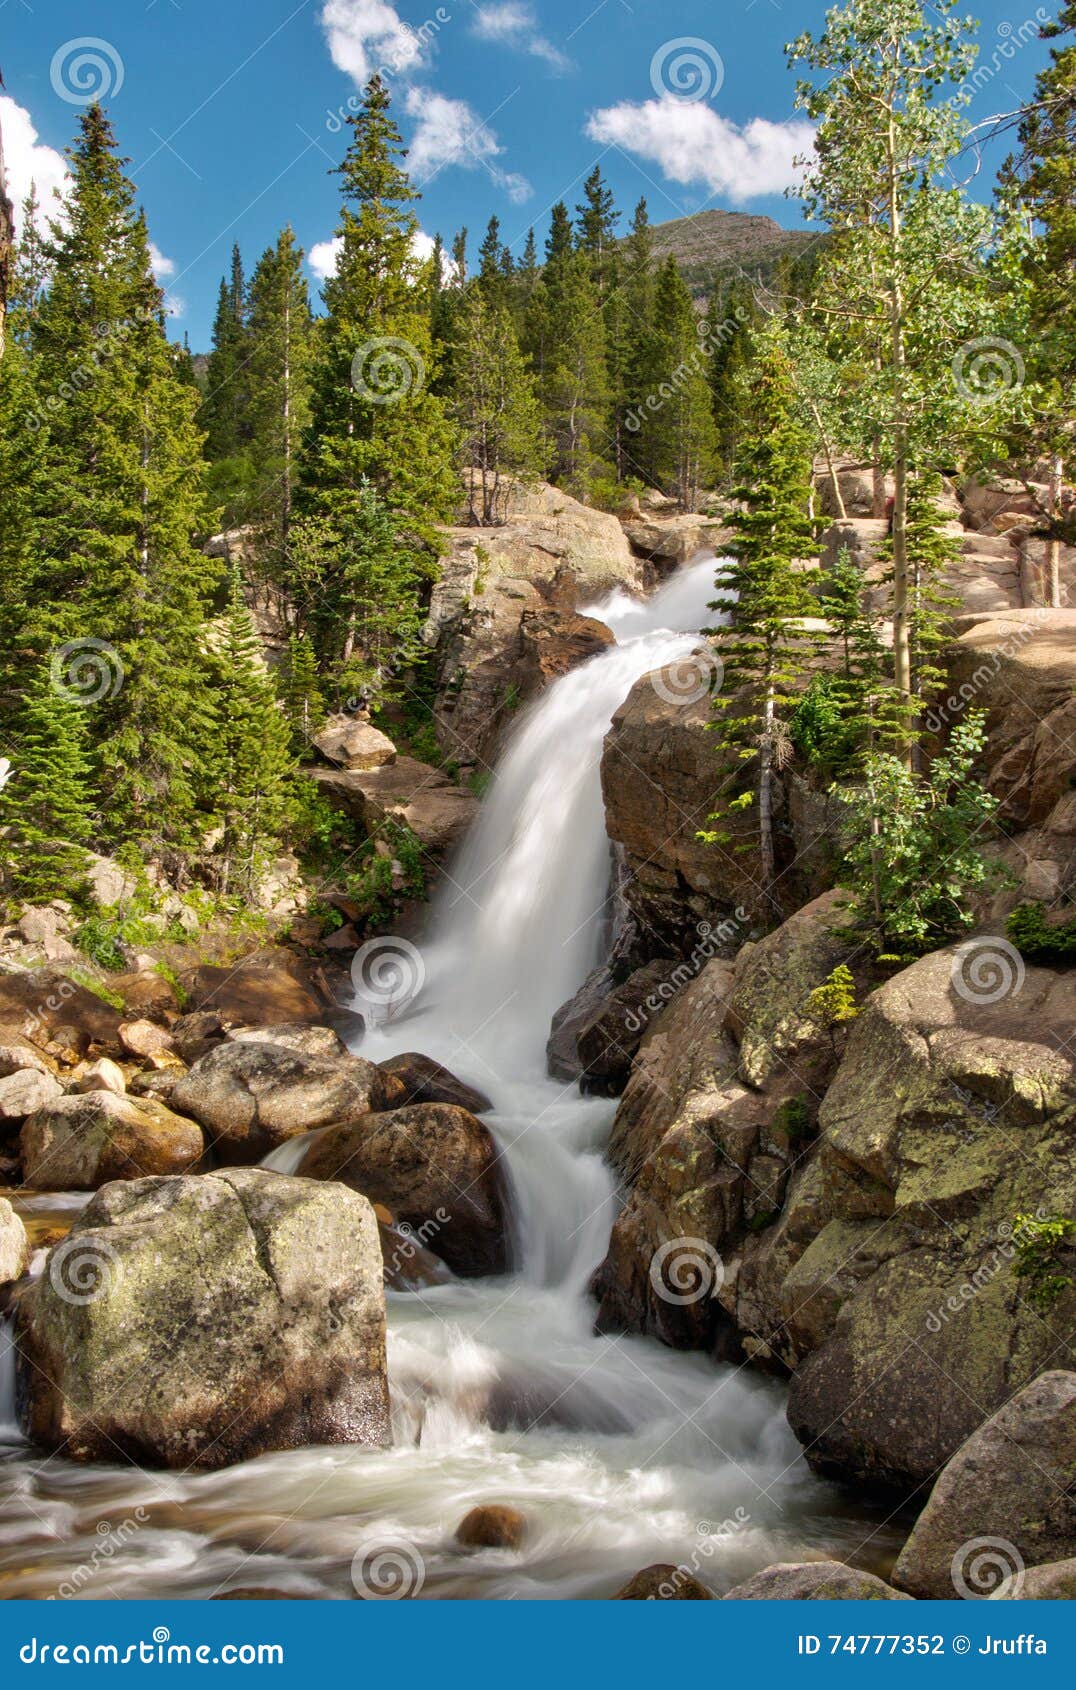 alberta falls in rocky mountain national park